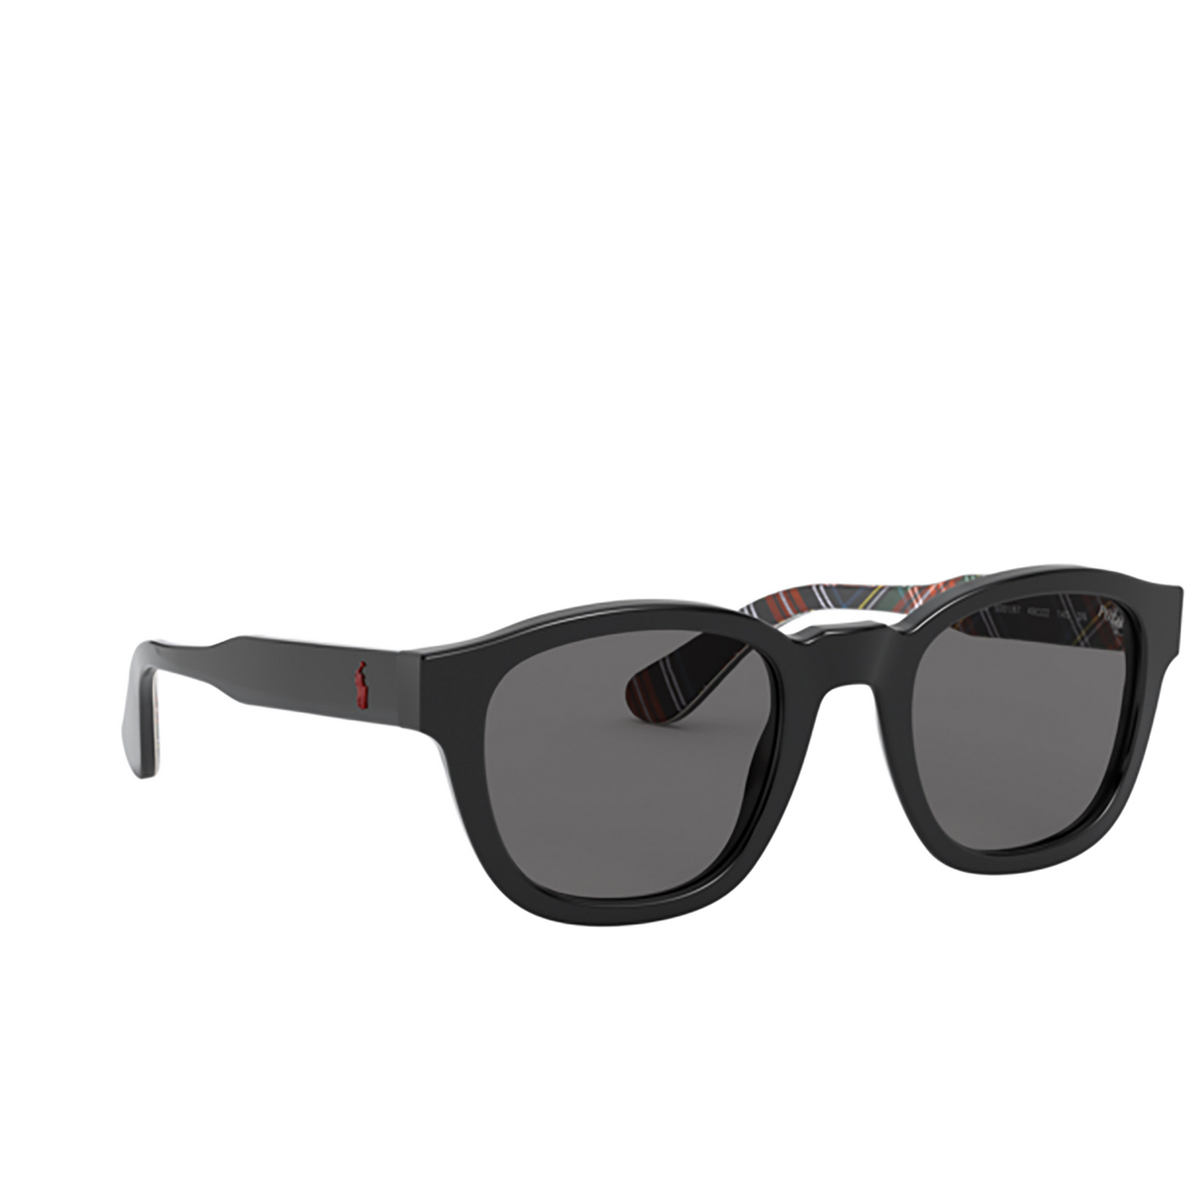 Polo Ralph Lauren® Square Sunglasses: PH4159 color Shiny Black 500187 - three-quarters view.